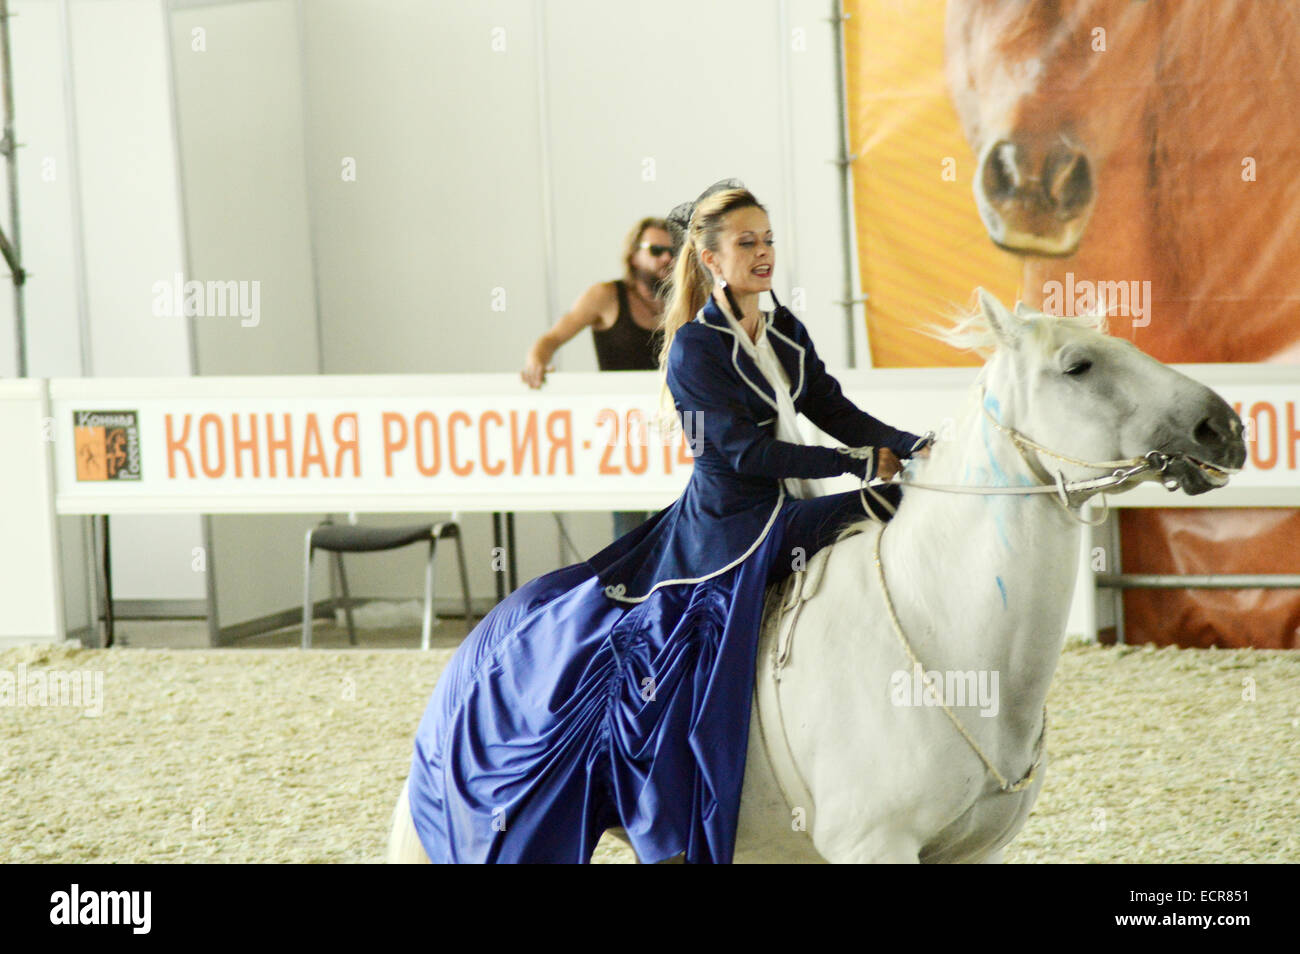 Riding hall International Horse Show. Woman jockey in blue dress Female rider on a white horse. Stock Photo